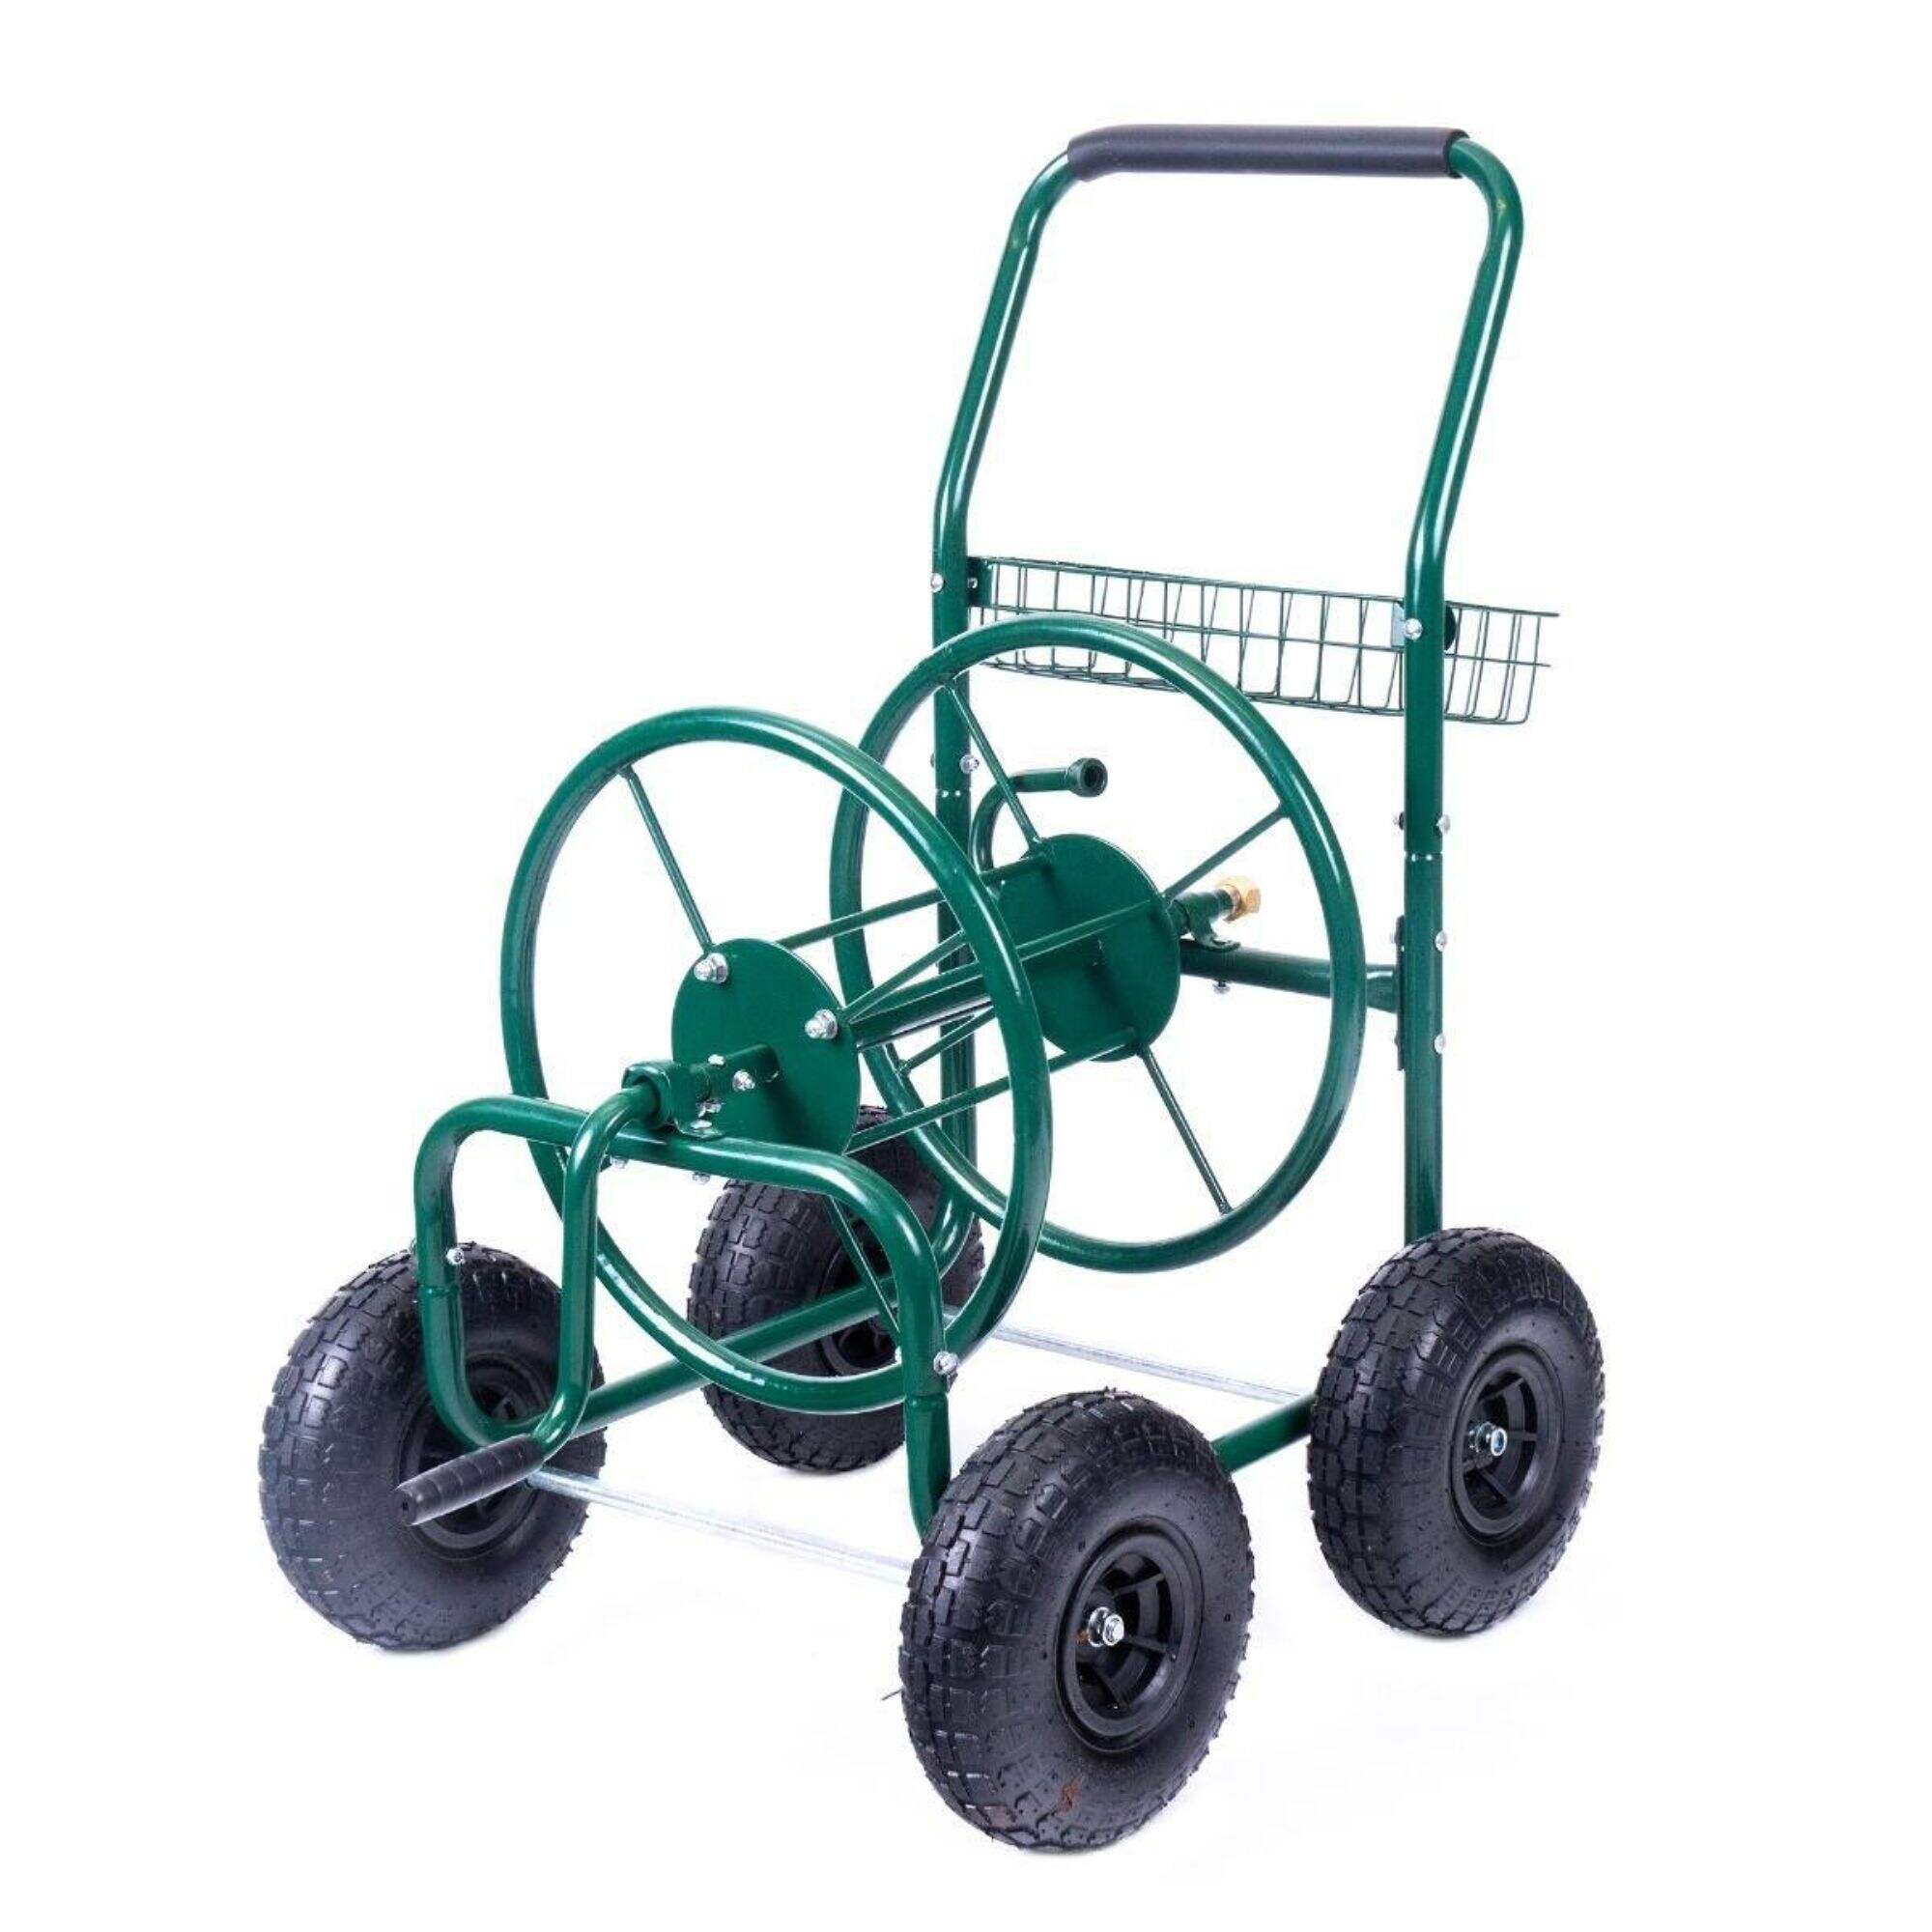 TC1851 Heavy Duty Hose Caddie, Metal Garden Water Hose Reel Cart for Lawn Yard Outdoor, with 4 Pneumatic Wheels, Storage Basket